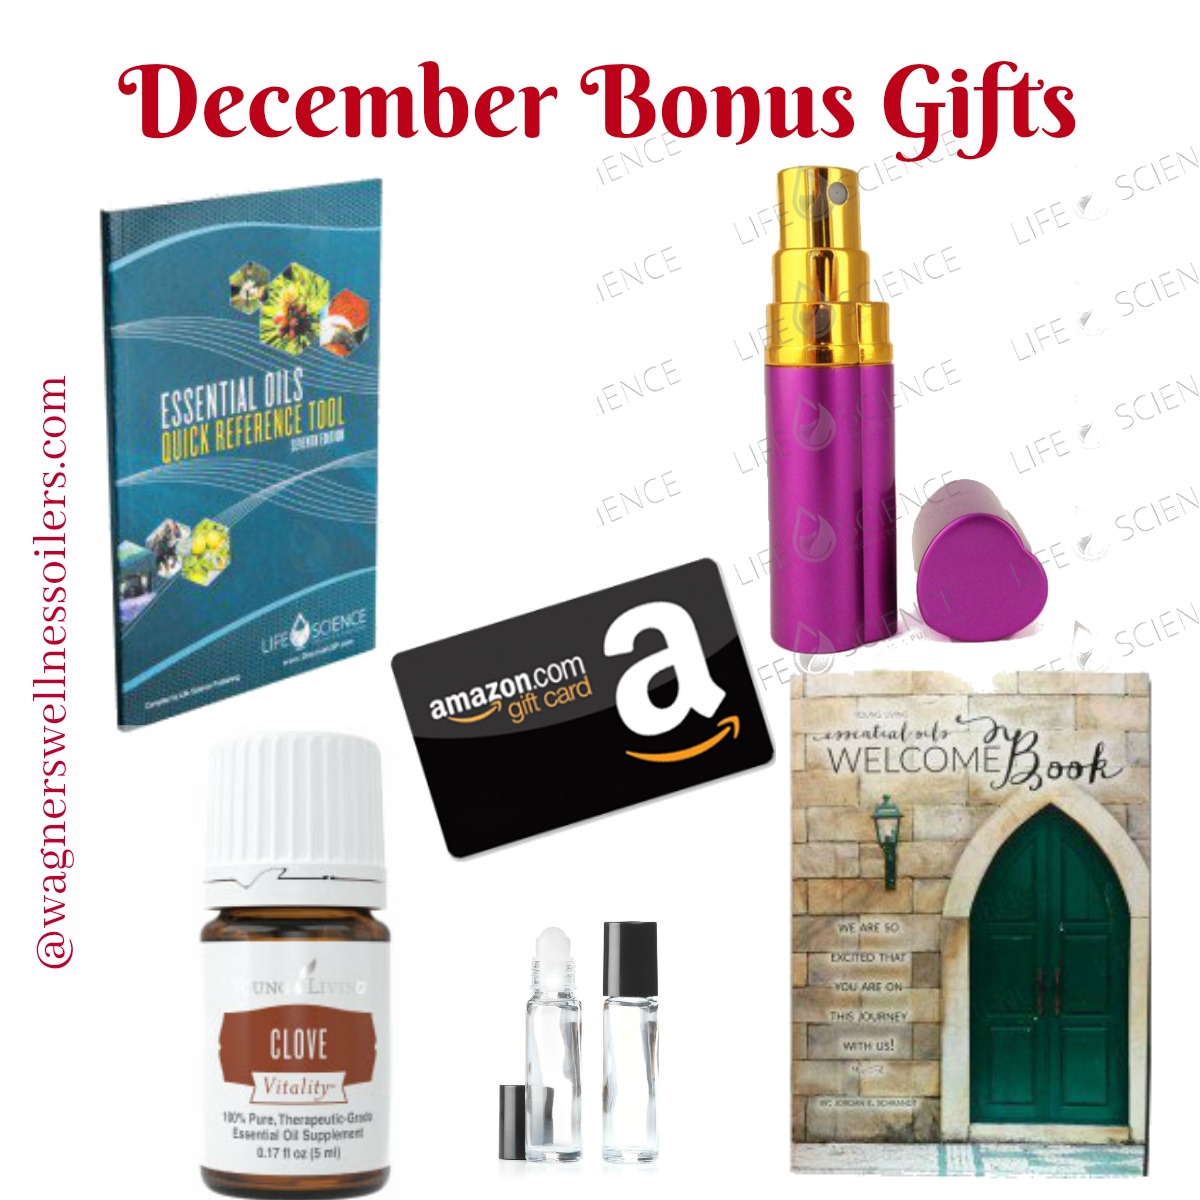 December Bonus Gifts